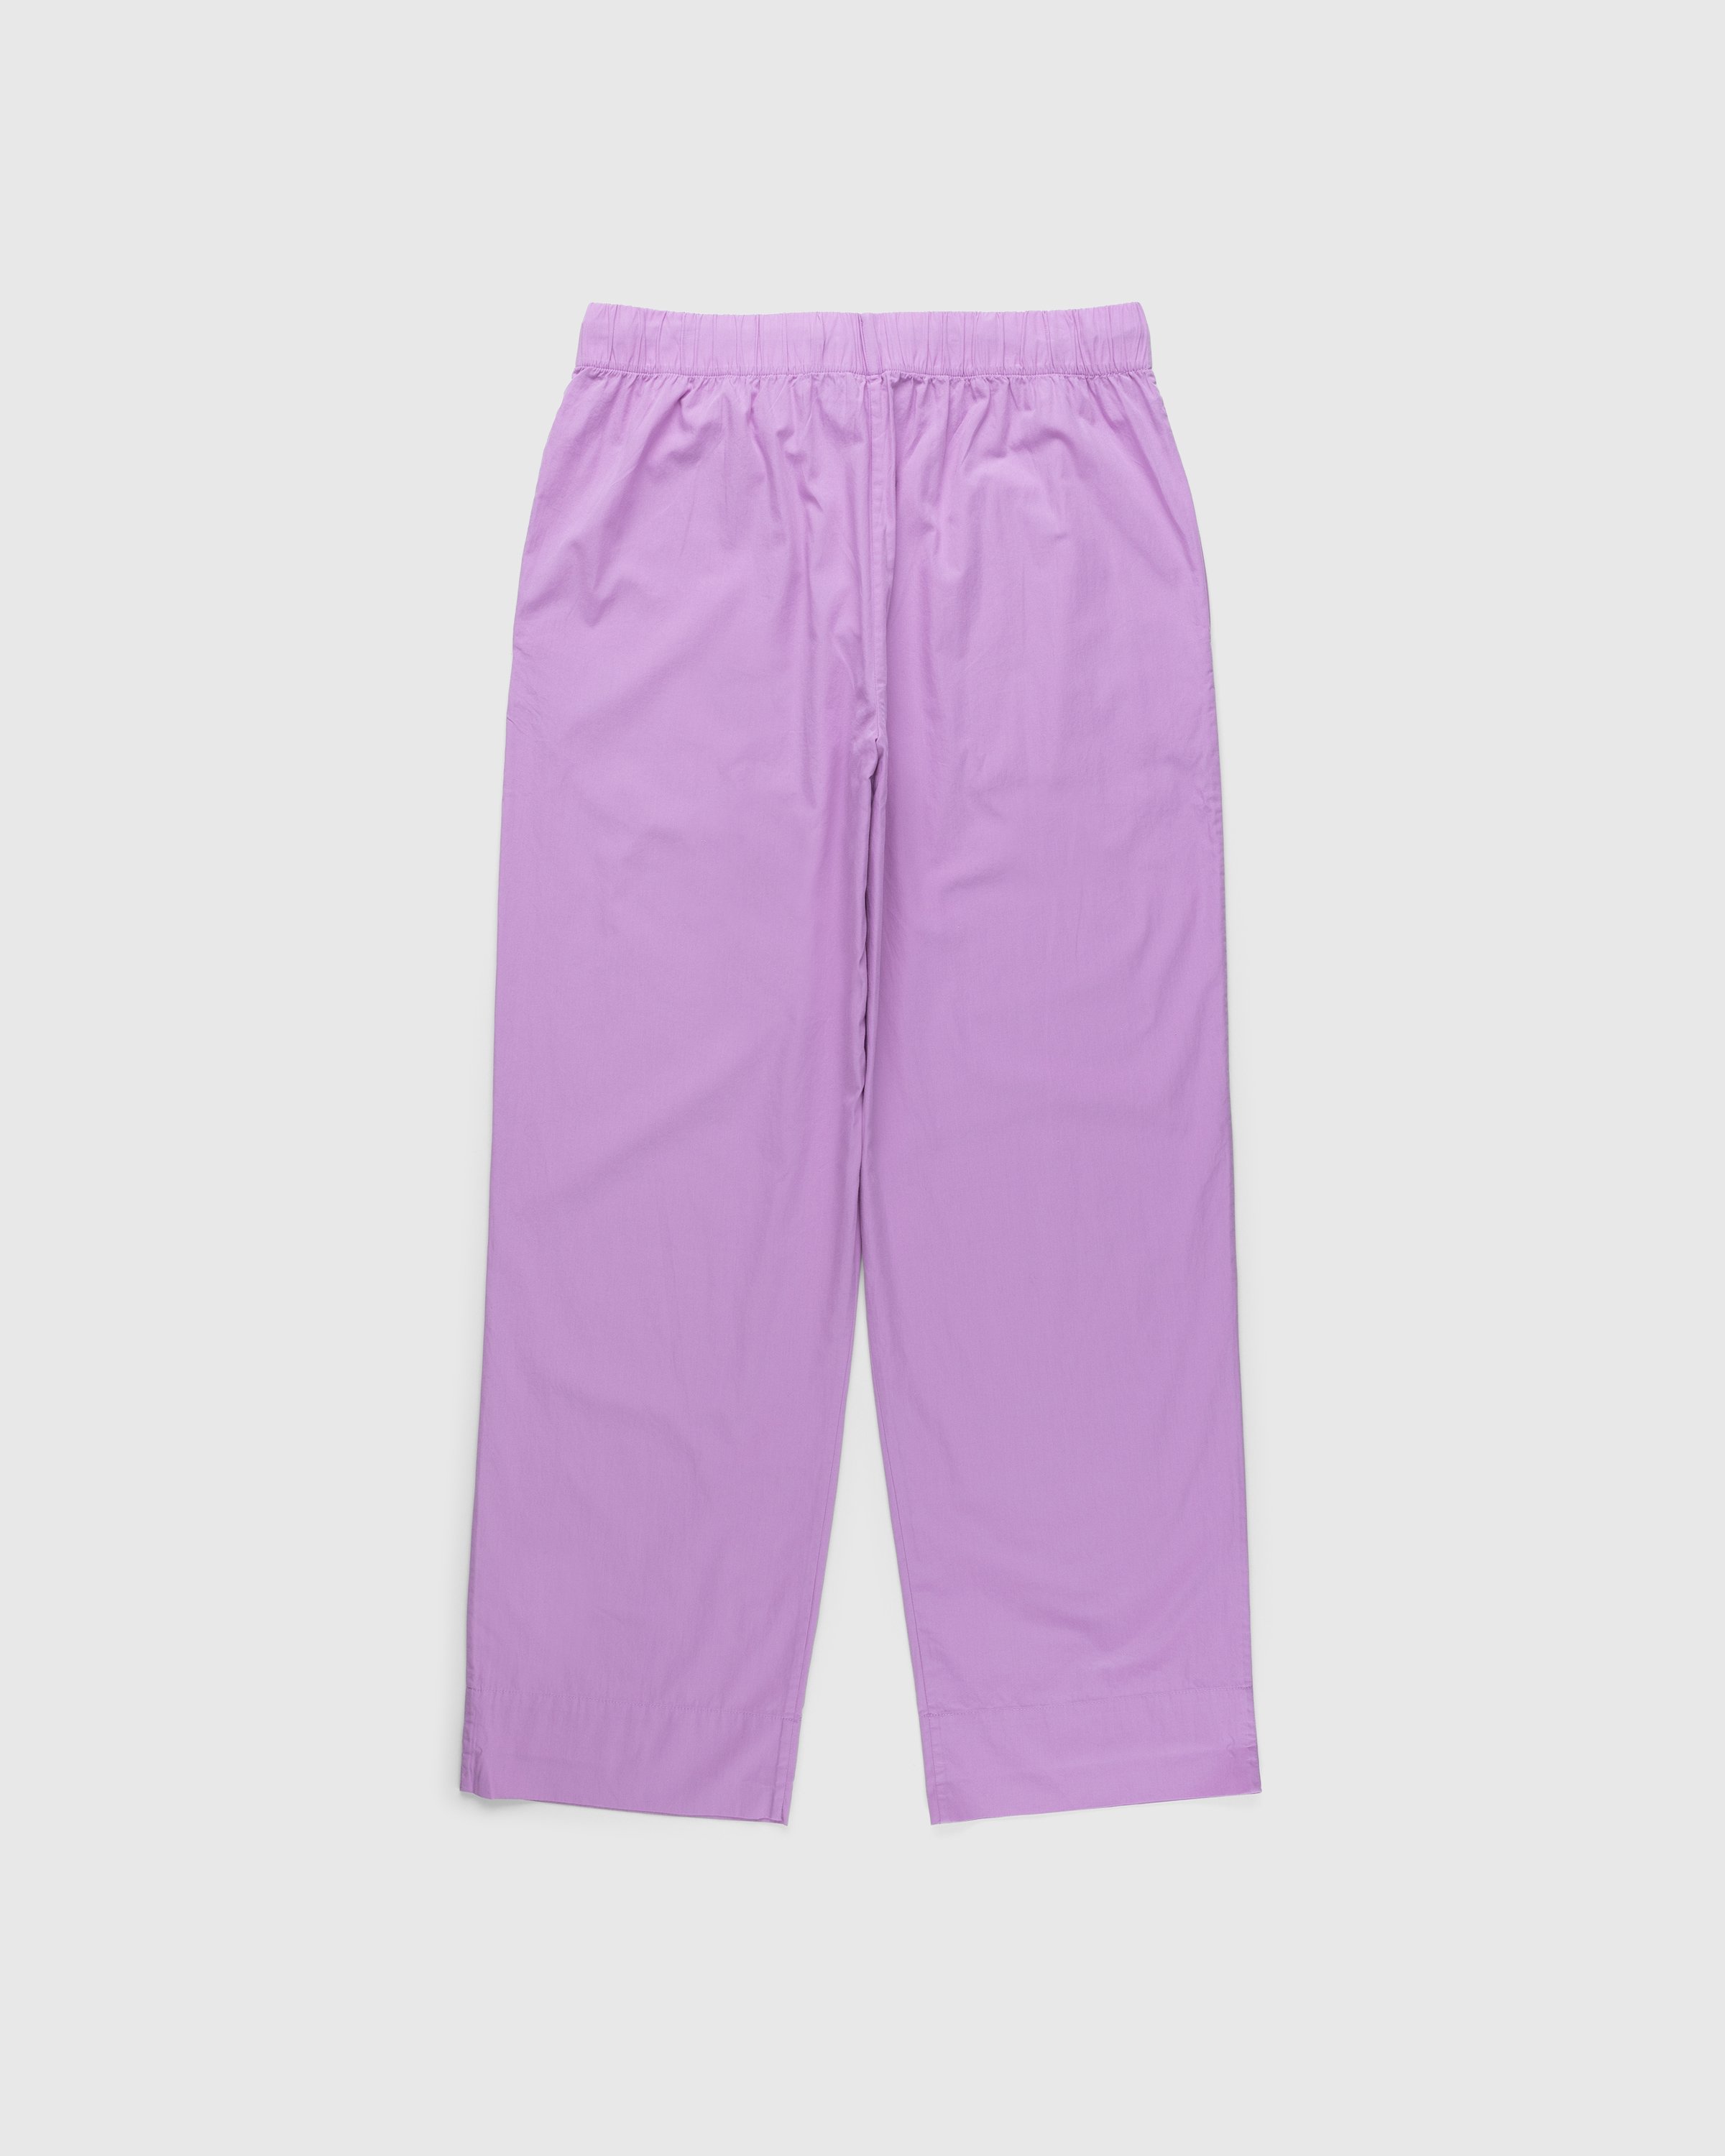 Tekla - Cotton Poplin Pyjamas Pants Purple Pink - Clothing - Pink - Image 2